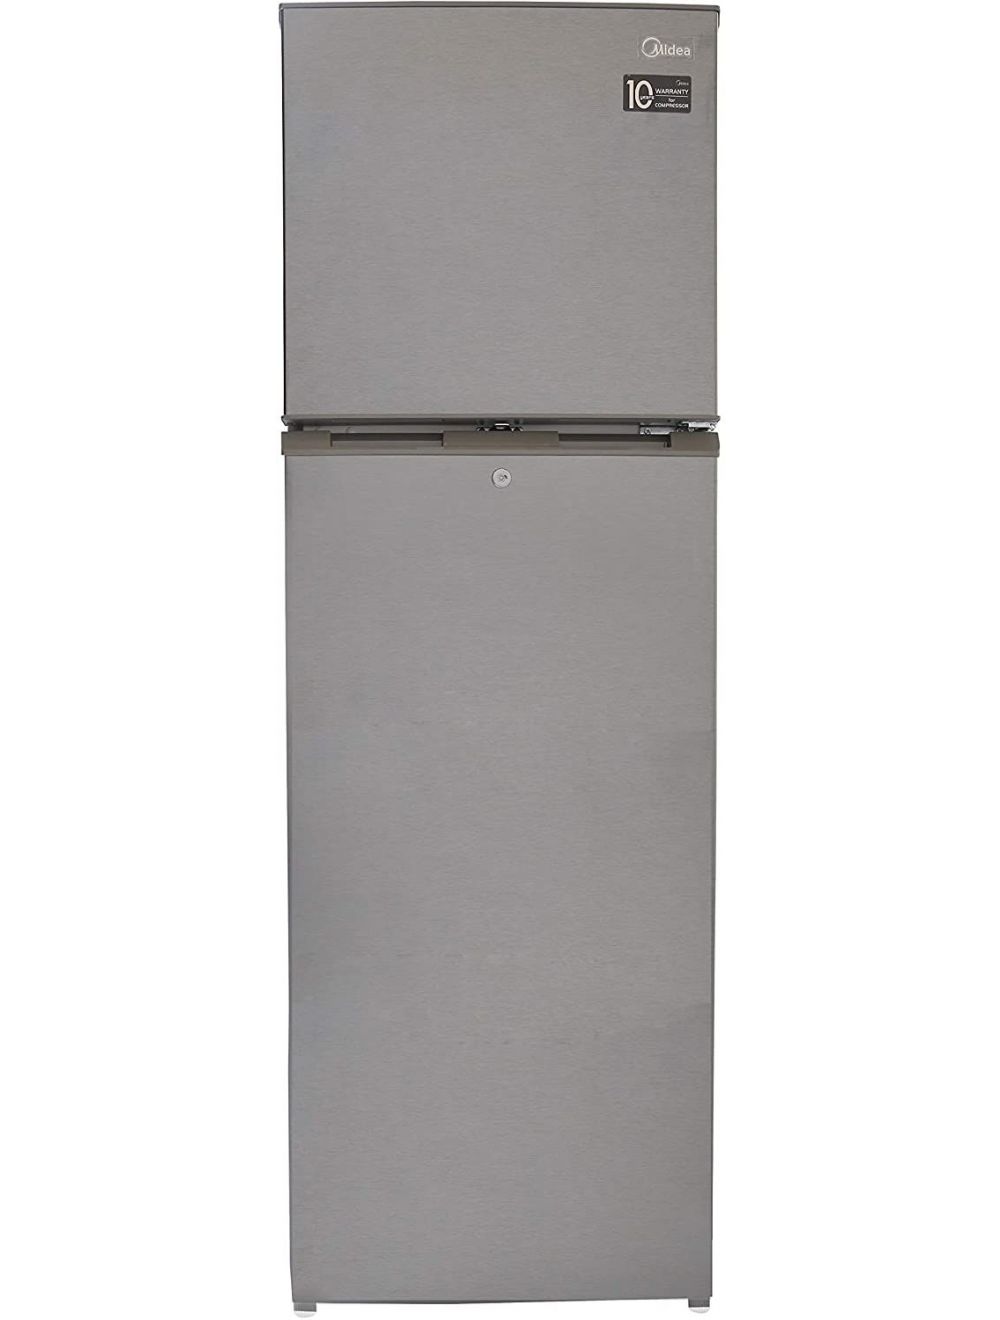 Midea 334 Litres Top Mount Refrigerator, Silver-HD334FWENS